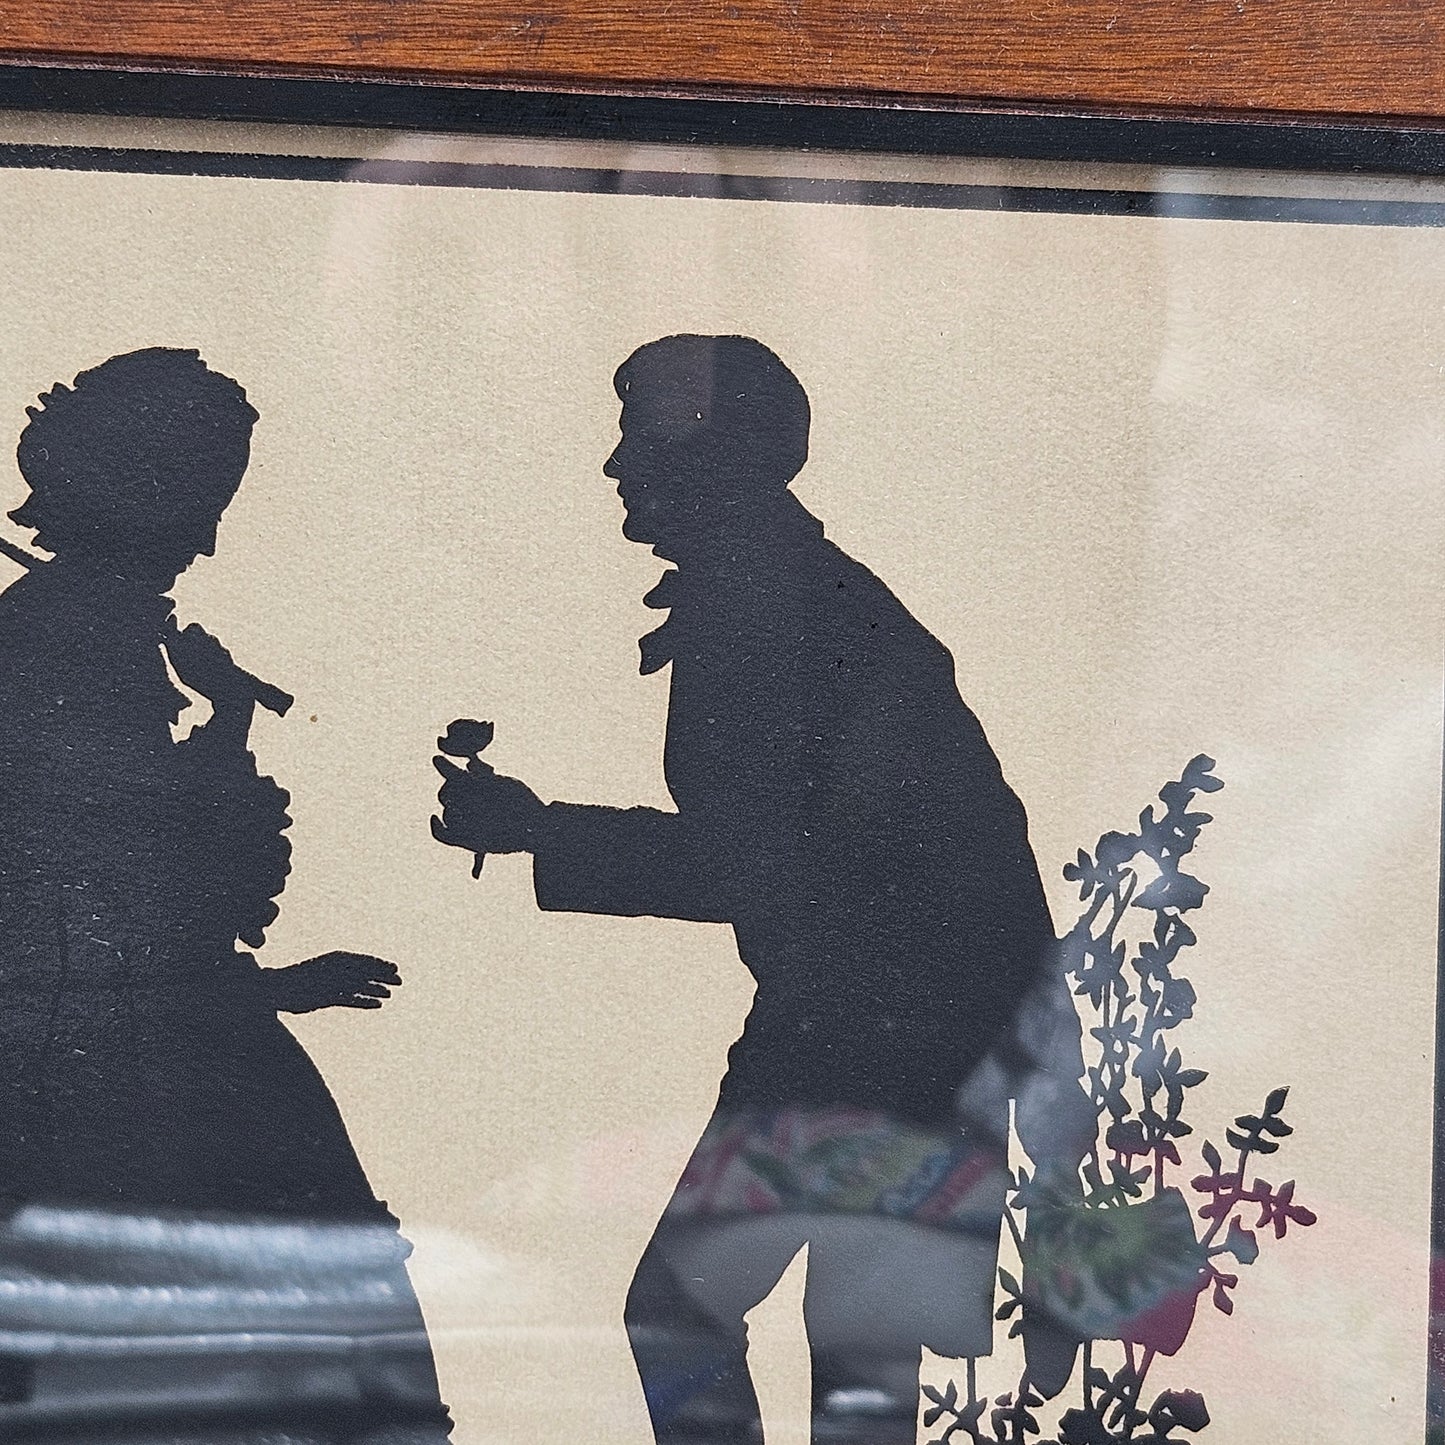 Vintage Silhouette Framed Art A Token of Affection No. 61 Miss Doris Burdick by Foster Bros